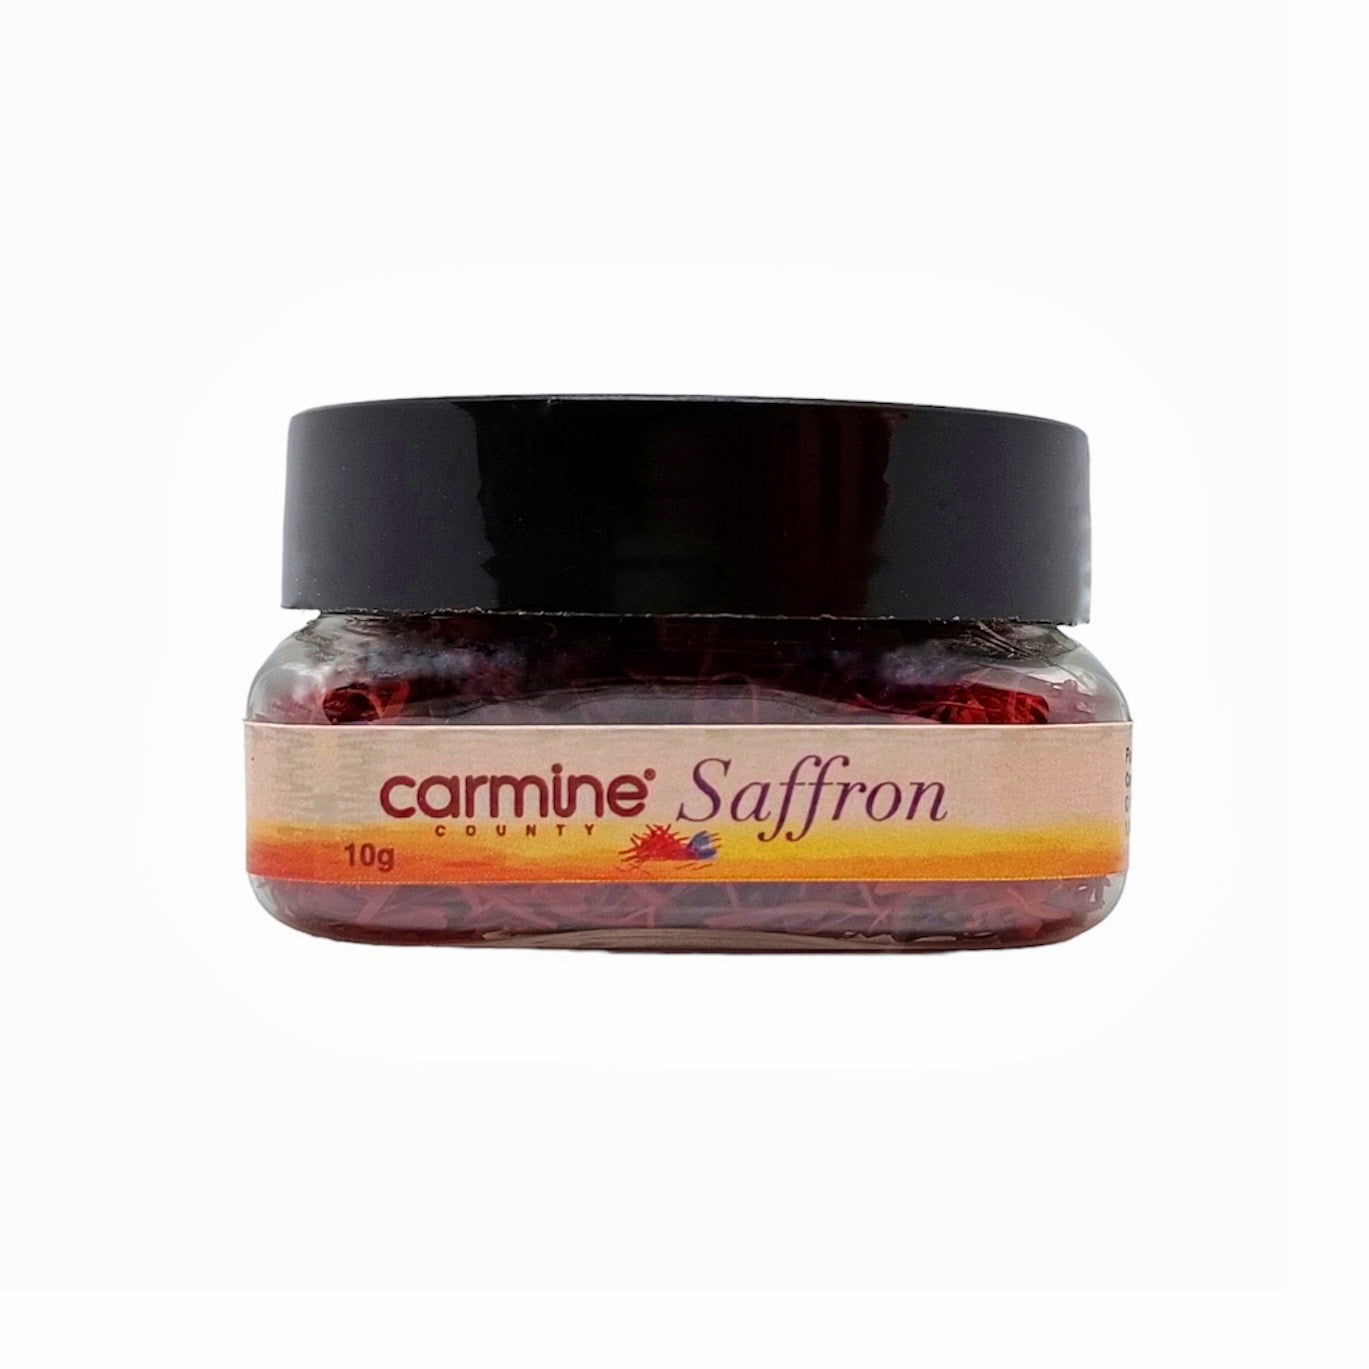 Carmine County Pure and Natural Saffron Threads